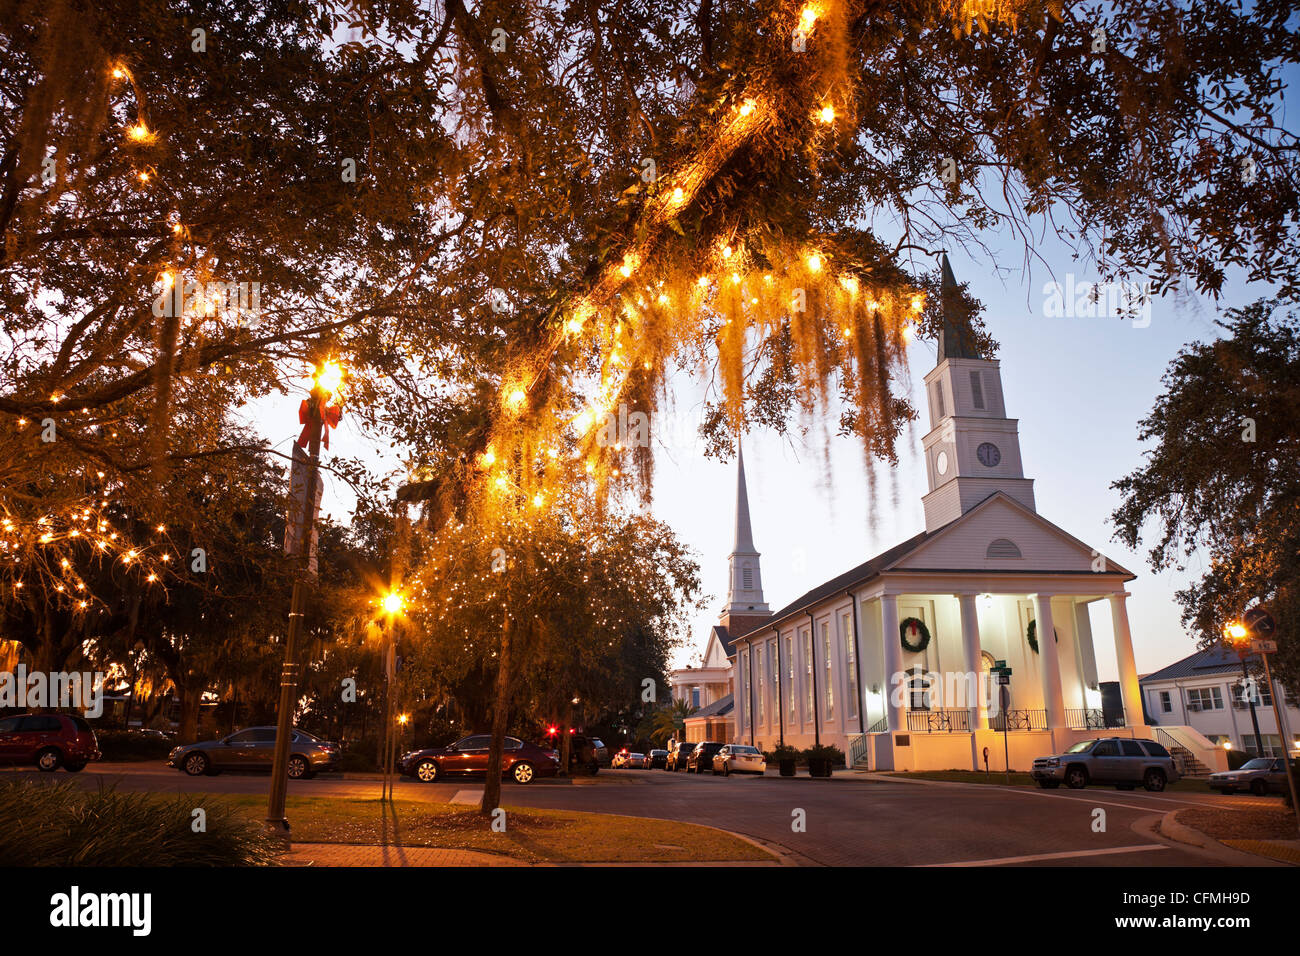 USA, Florida, Tallahassee, Church with lights on tree Stock Photo